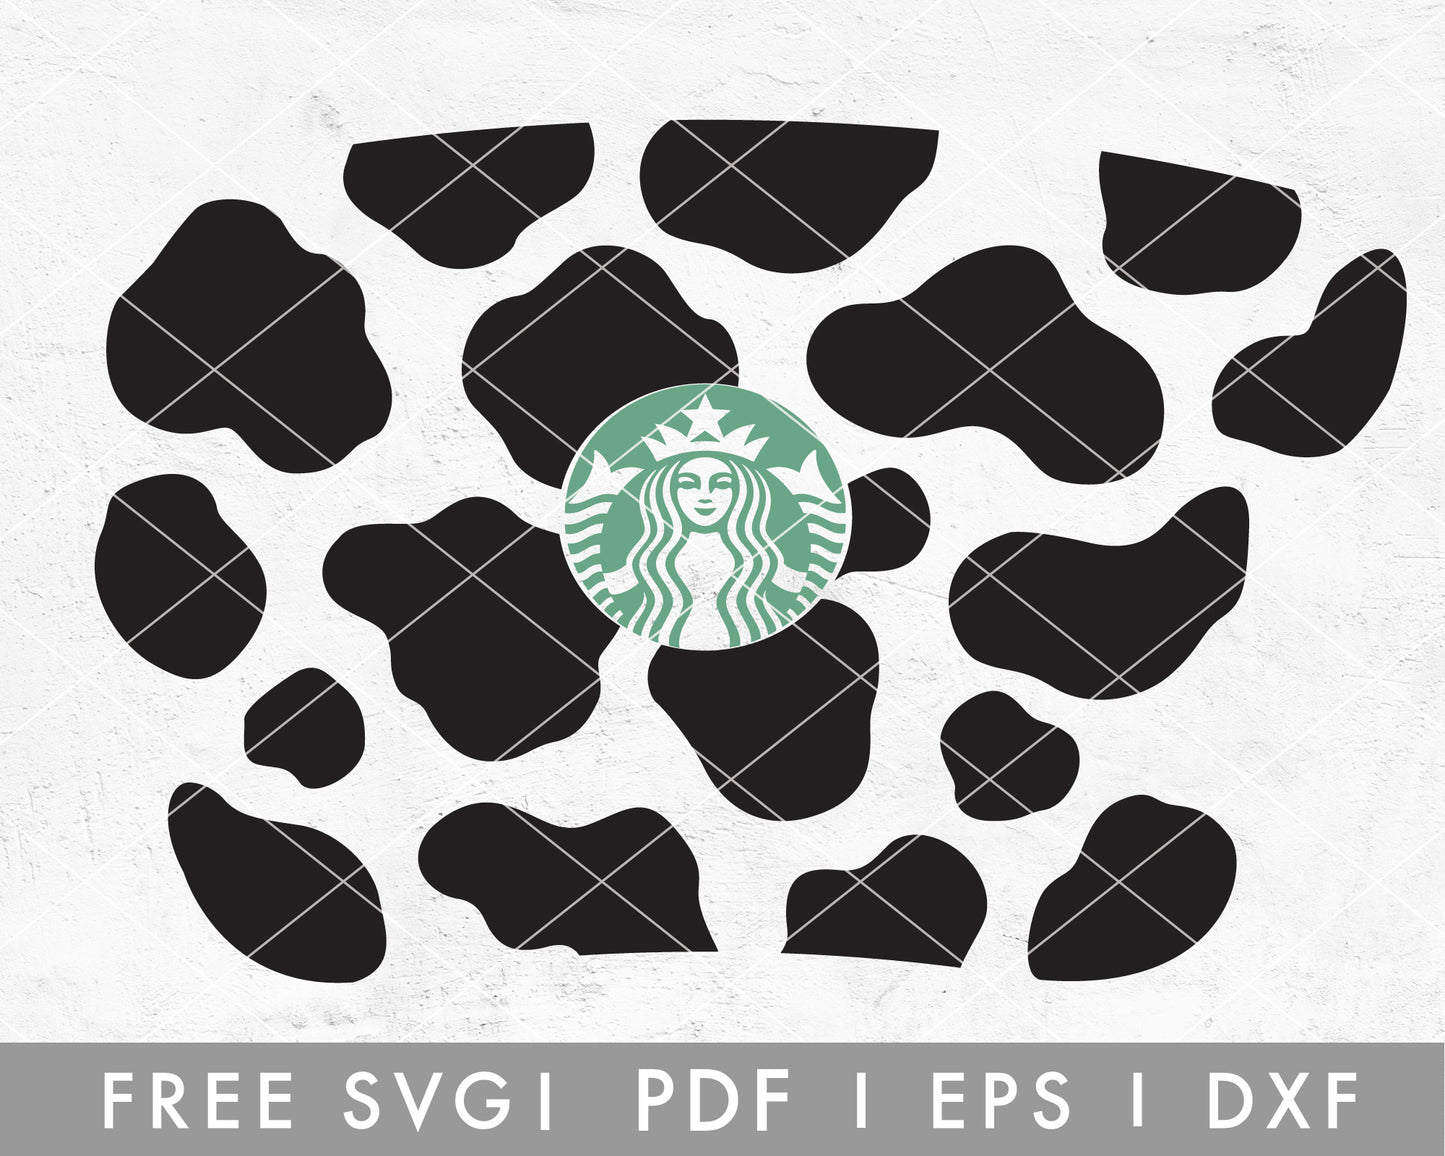 FREE FREE Starbucks Wrap SVG | Cow Print SVG Cut File for Cricut, Cameo Silhouette | Free SVG Cut File